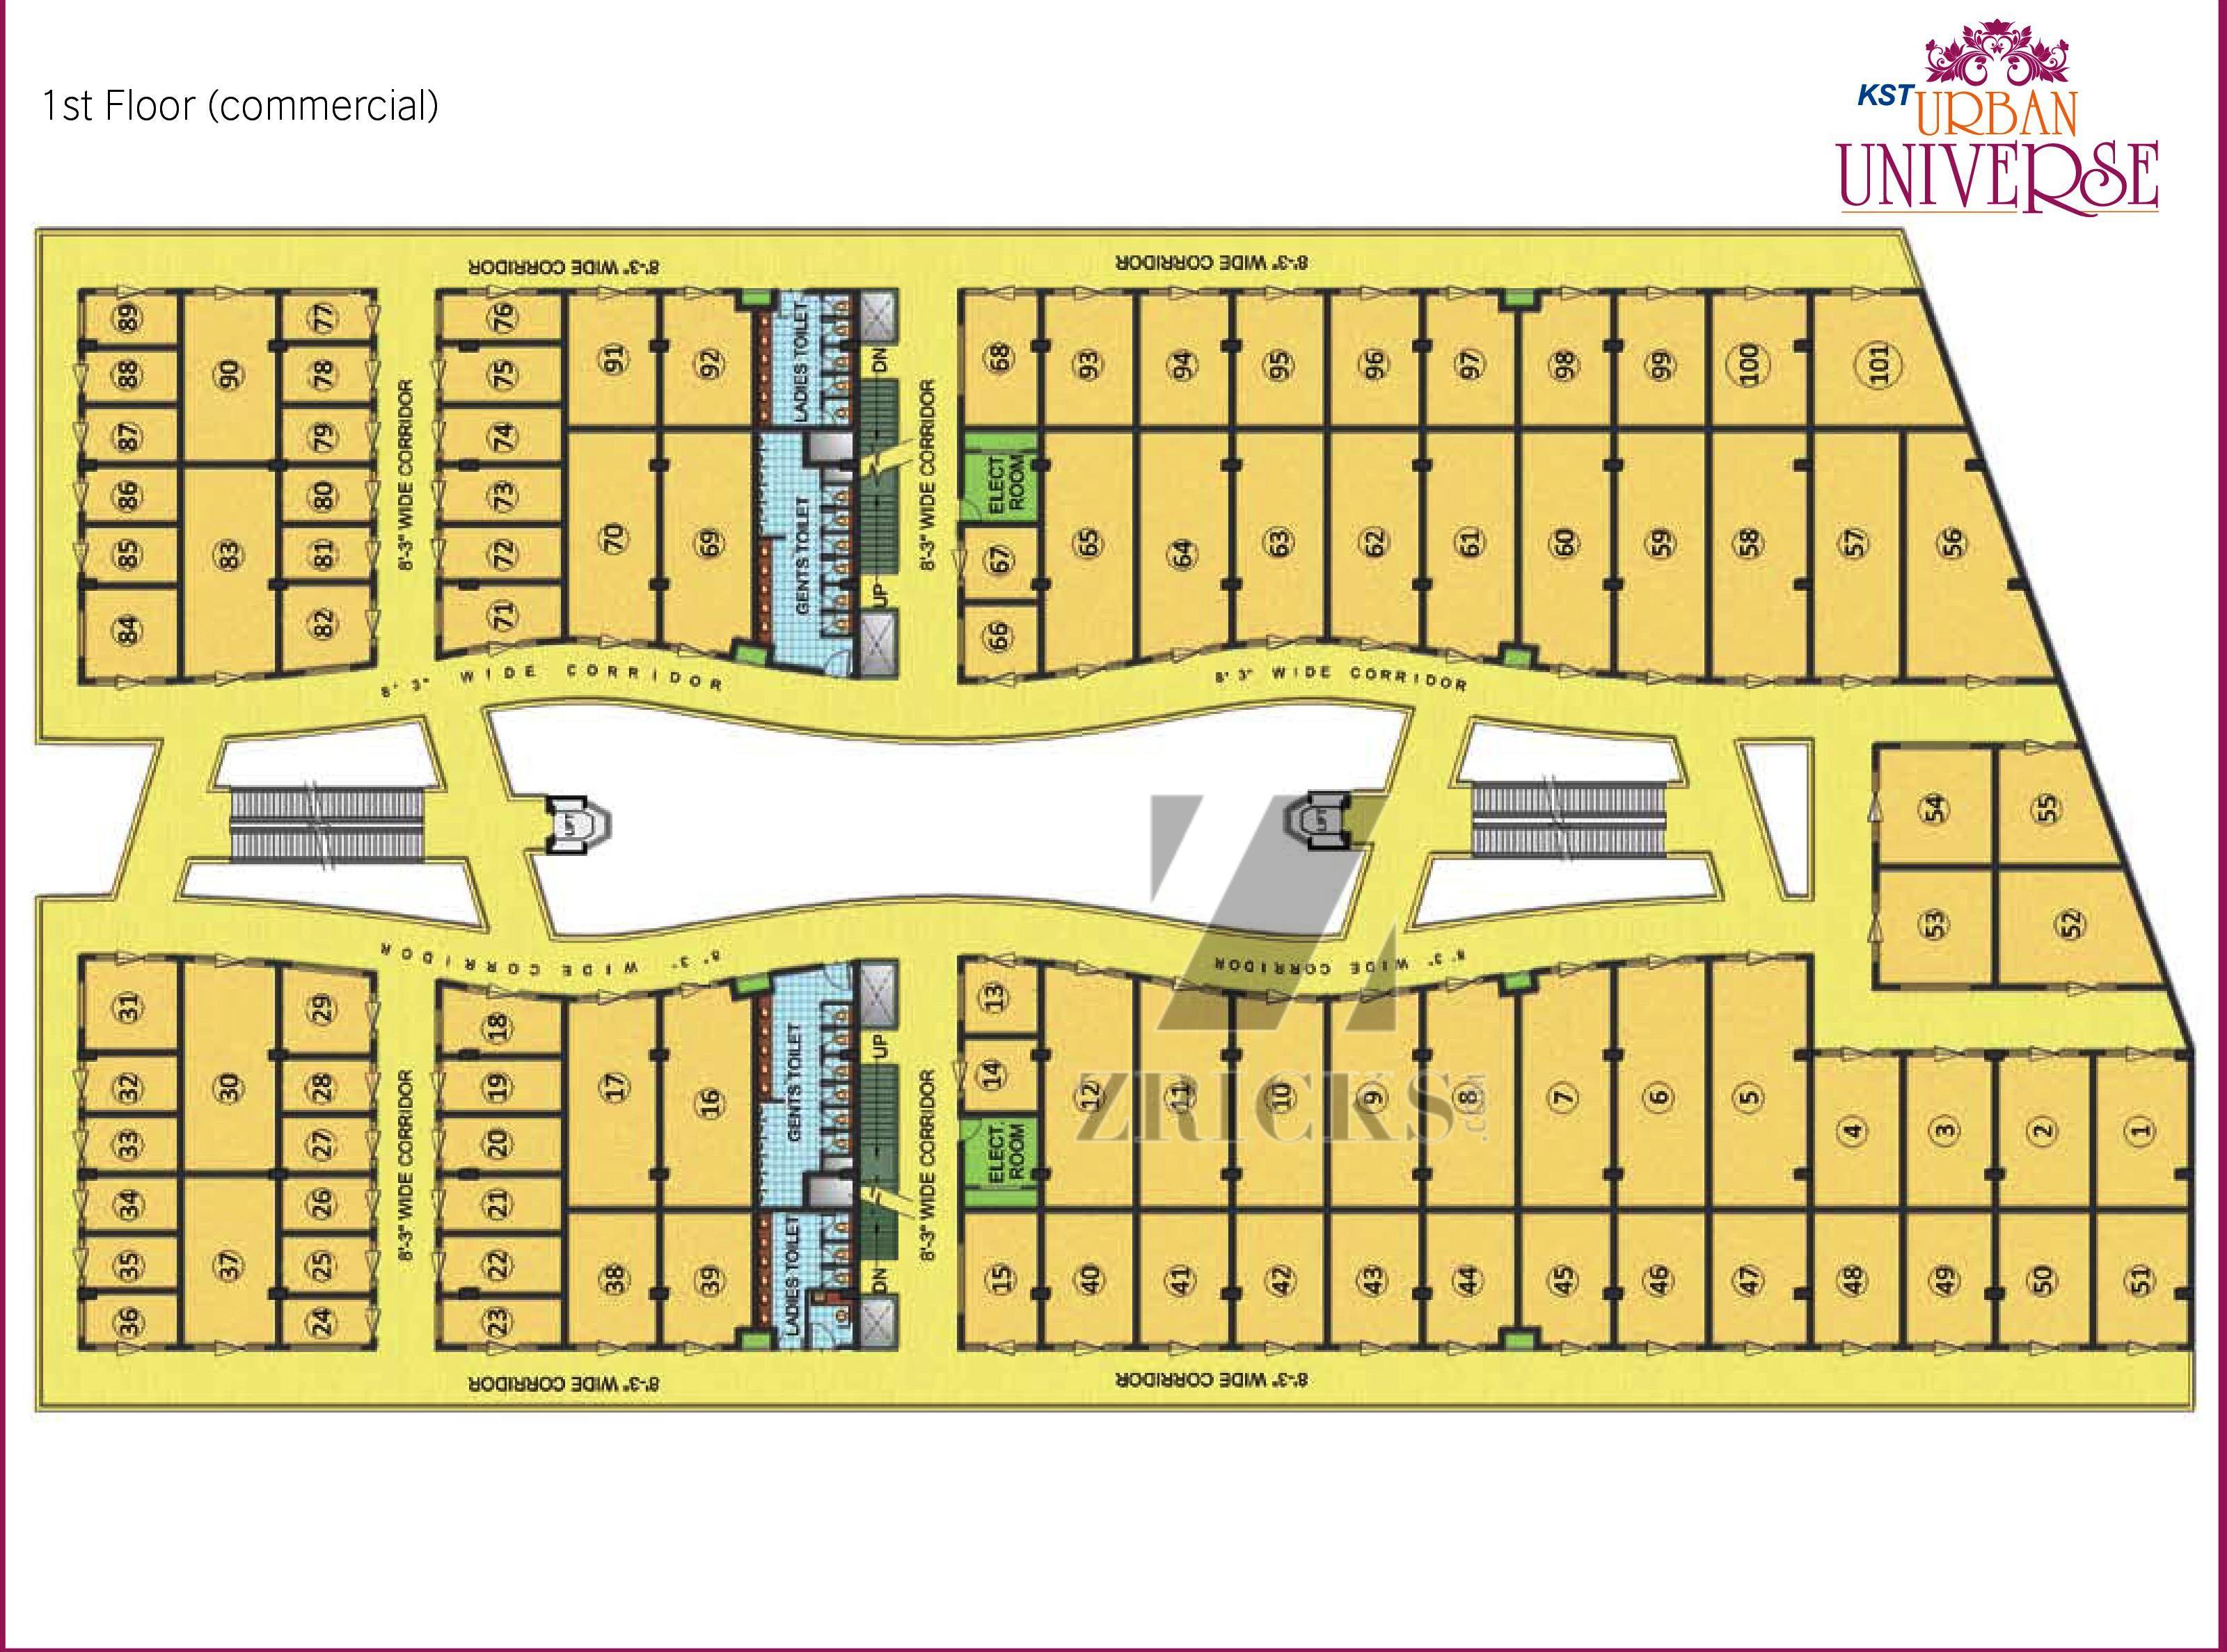 KST Urban Universe Floor Plan